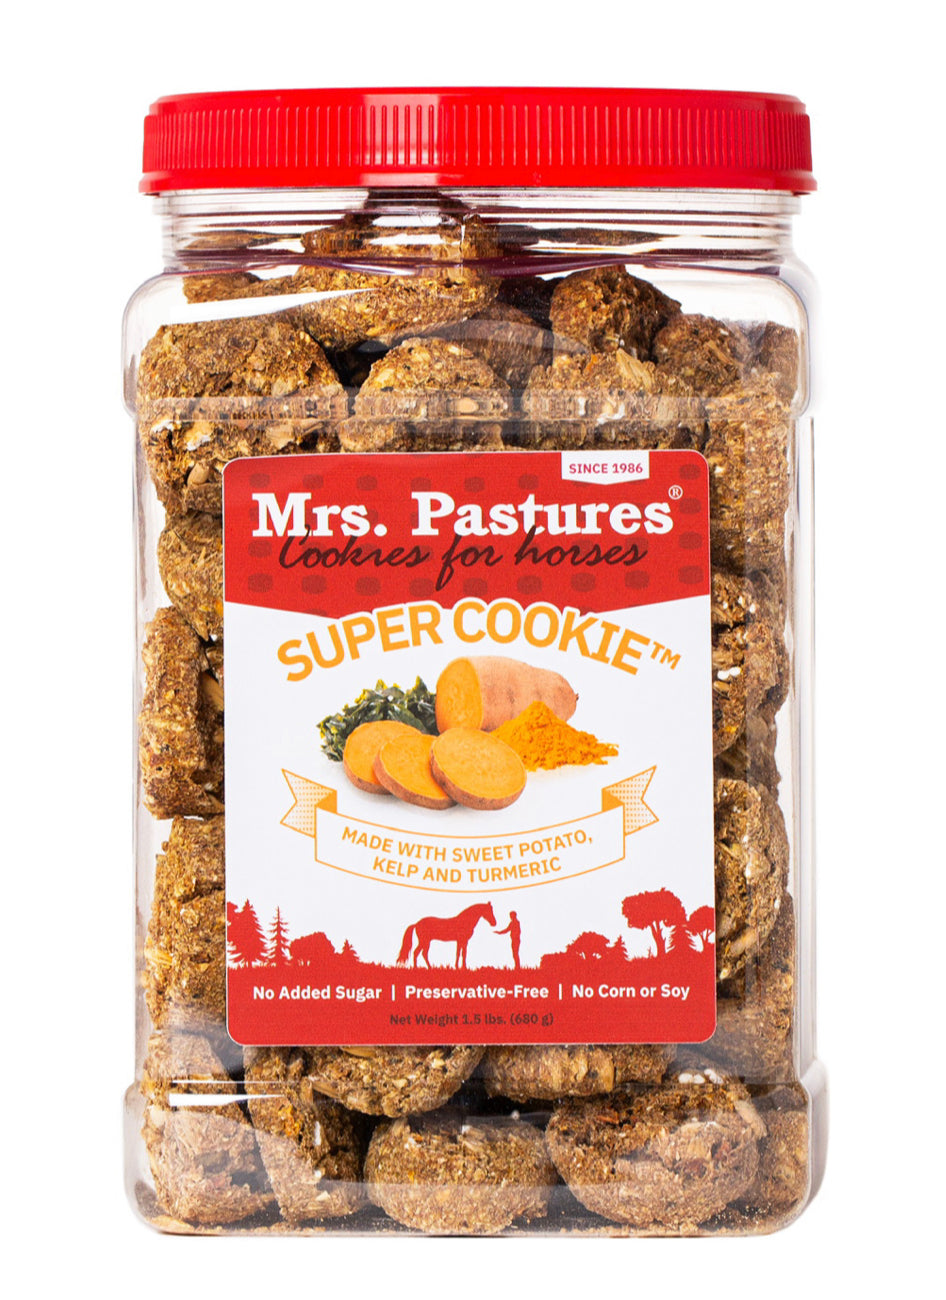 MRS. PASTURES SUPER COOKIE JAR